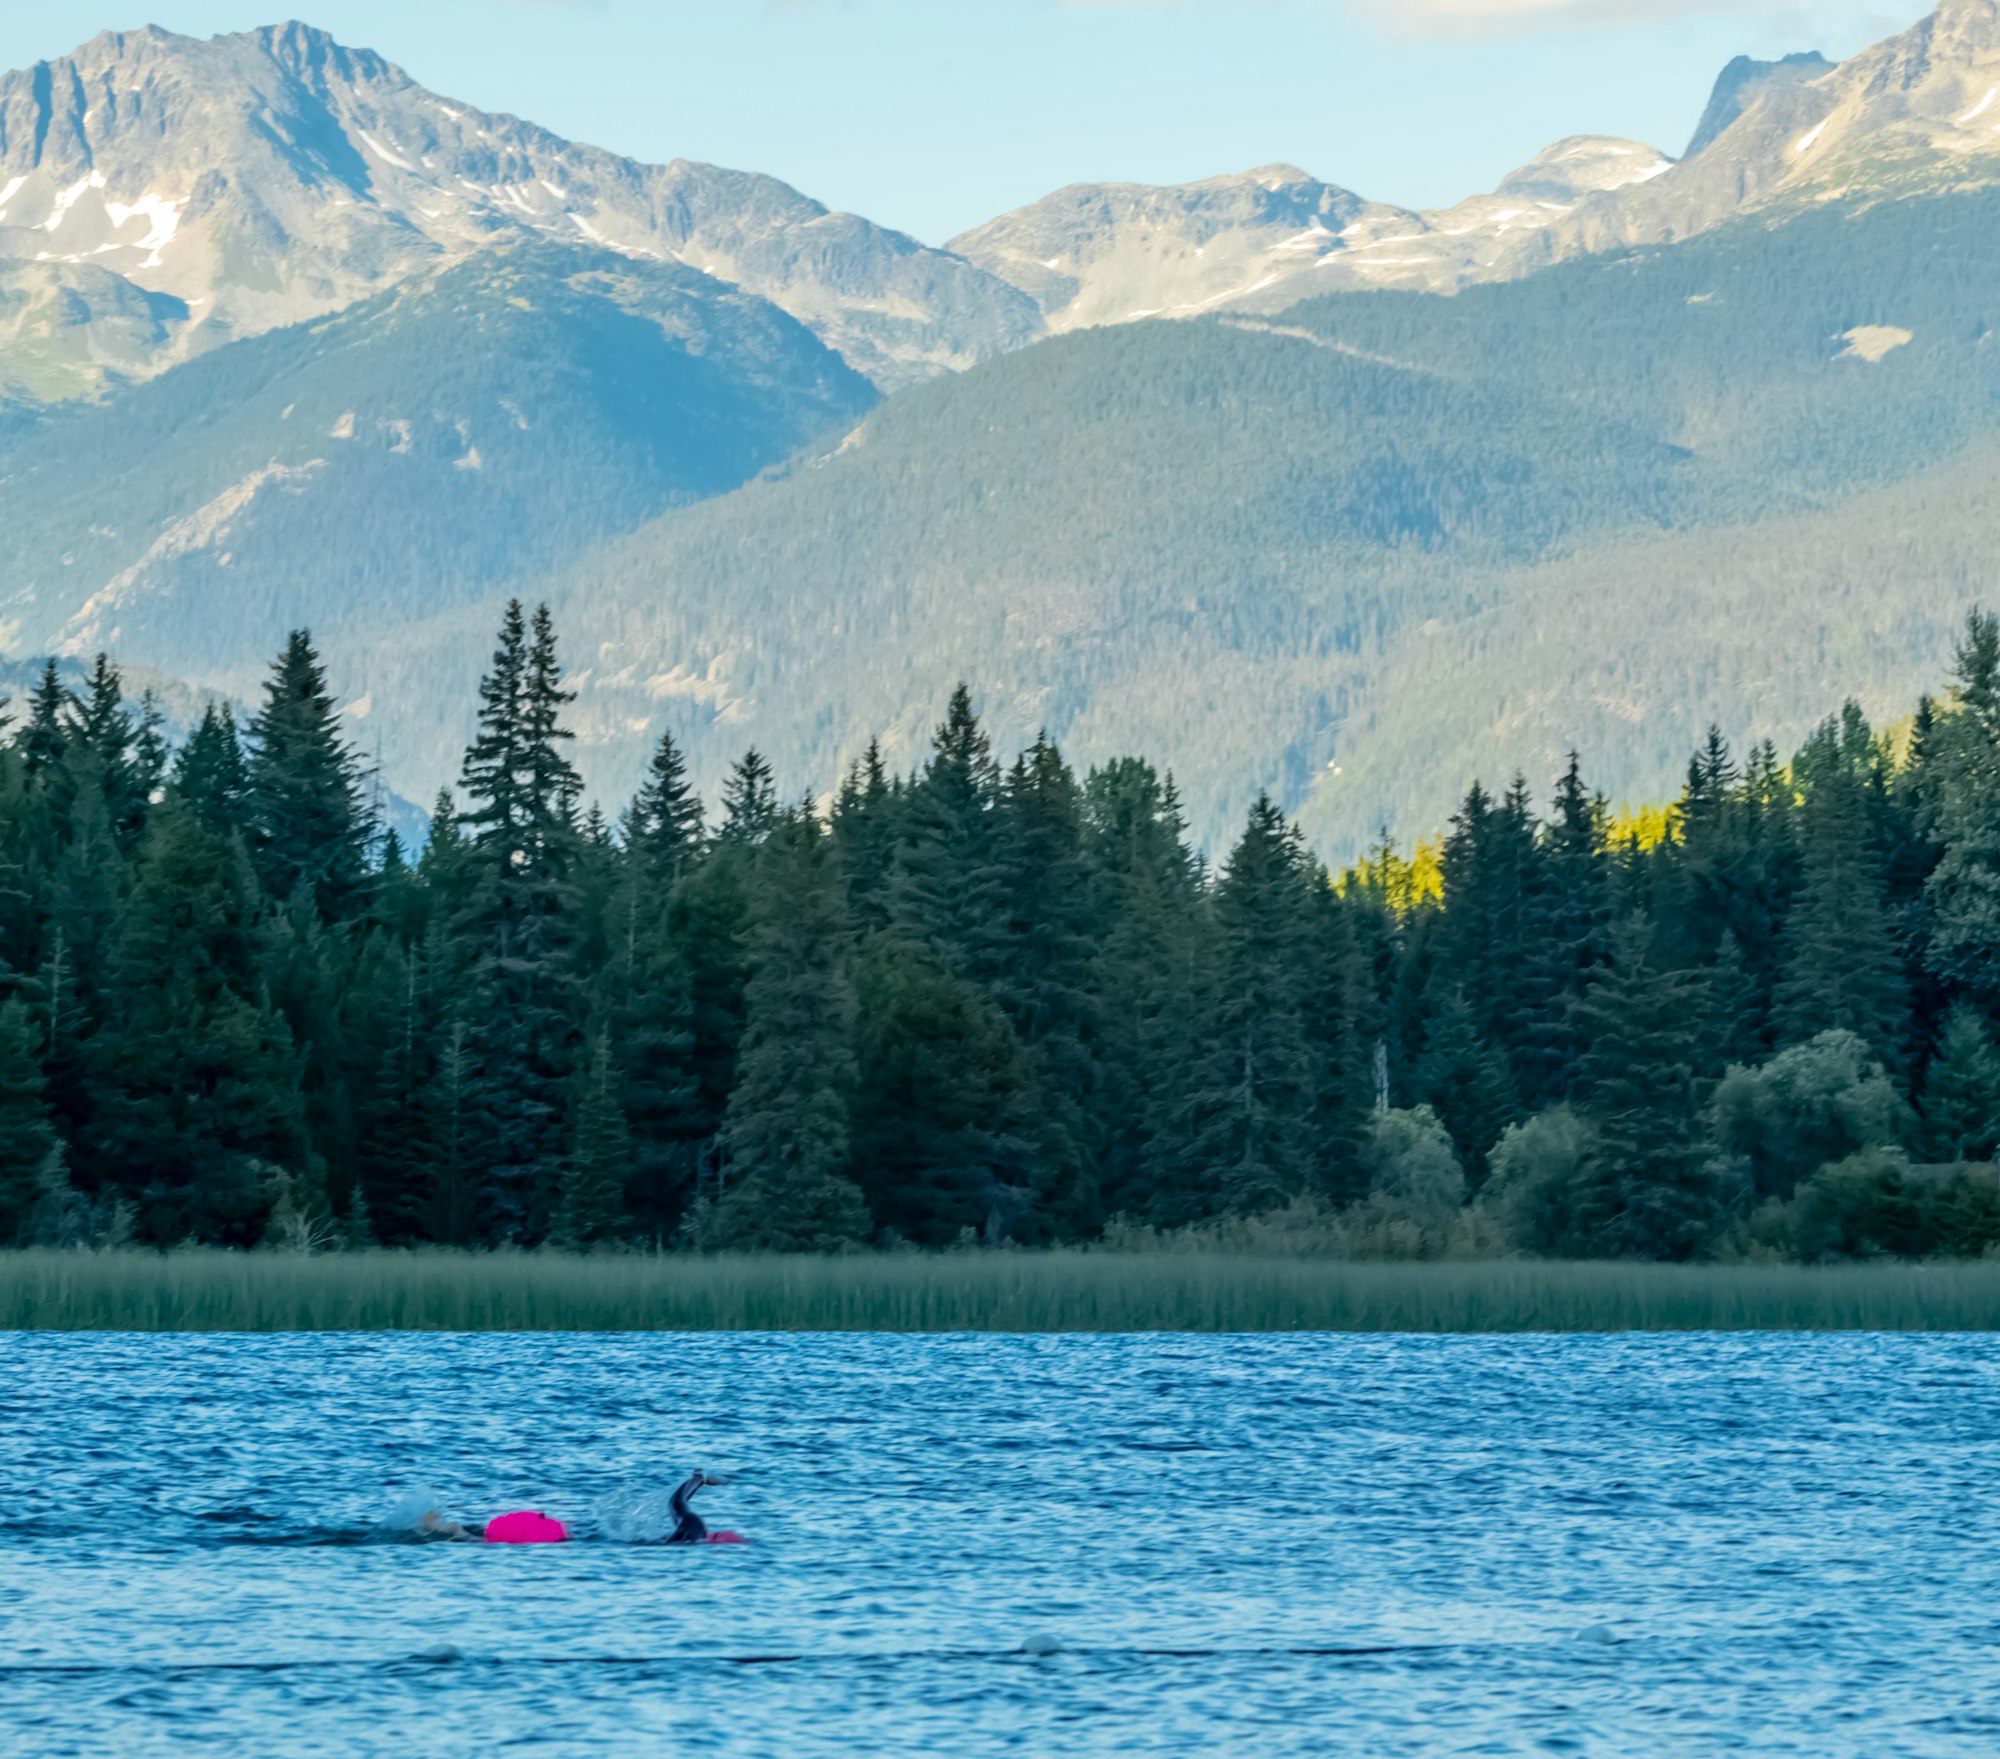 Triathlete swimming in Alta Lake, Whistler. 